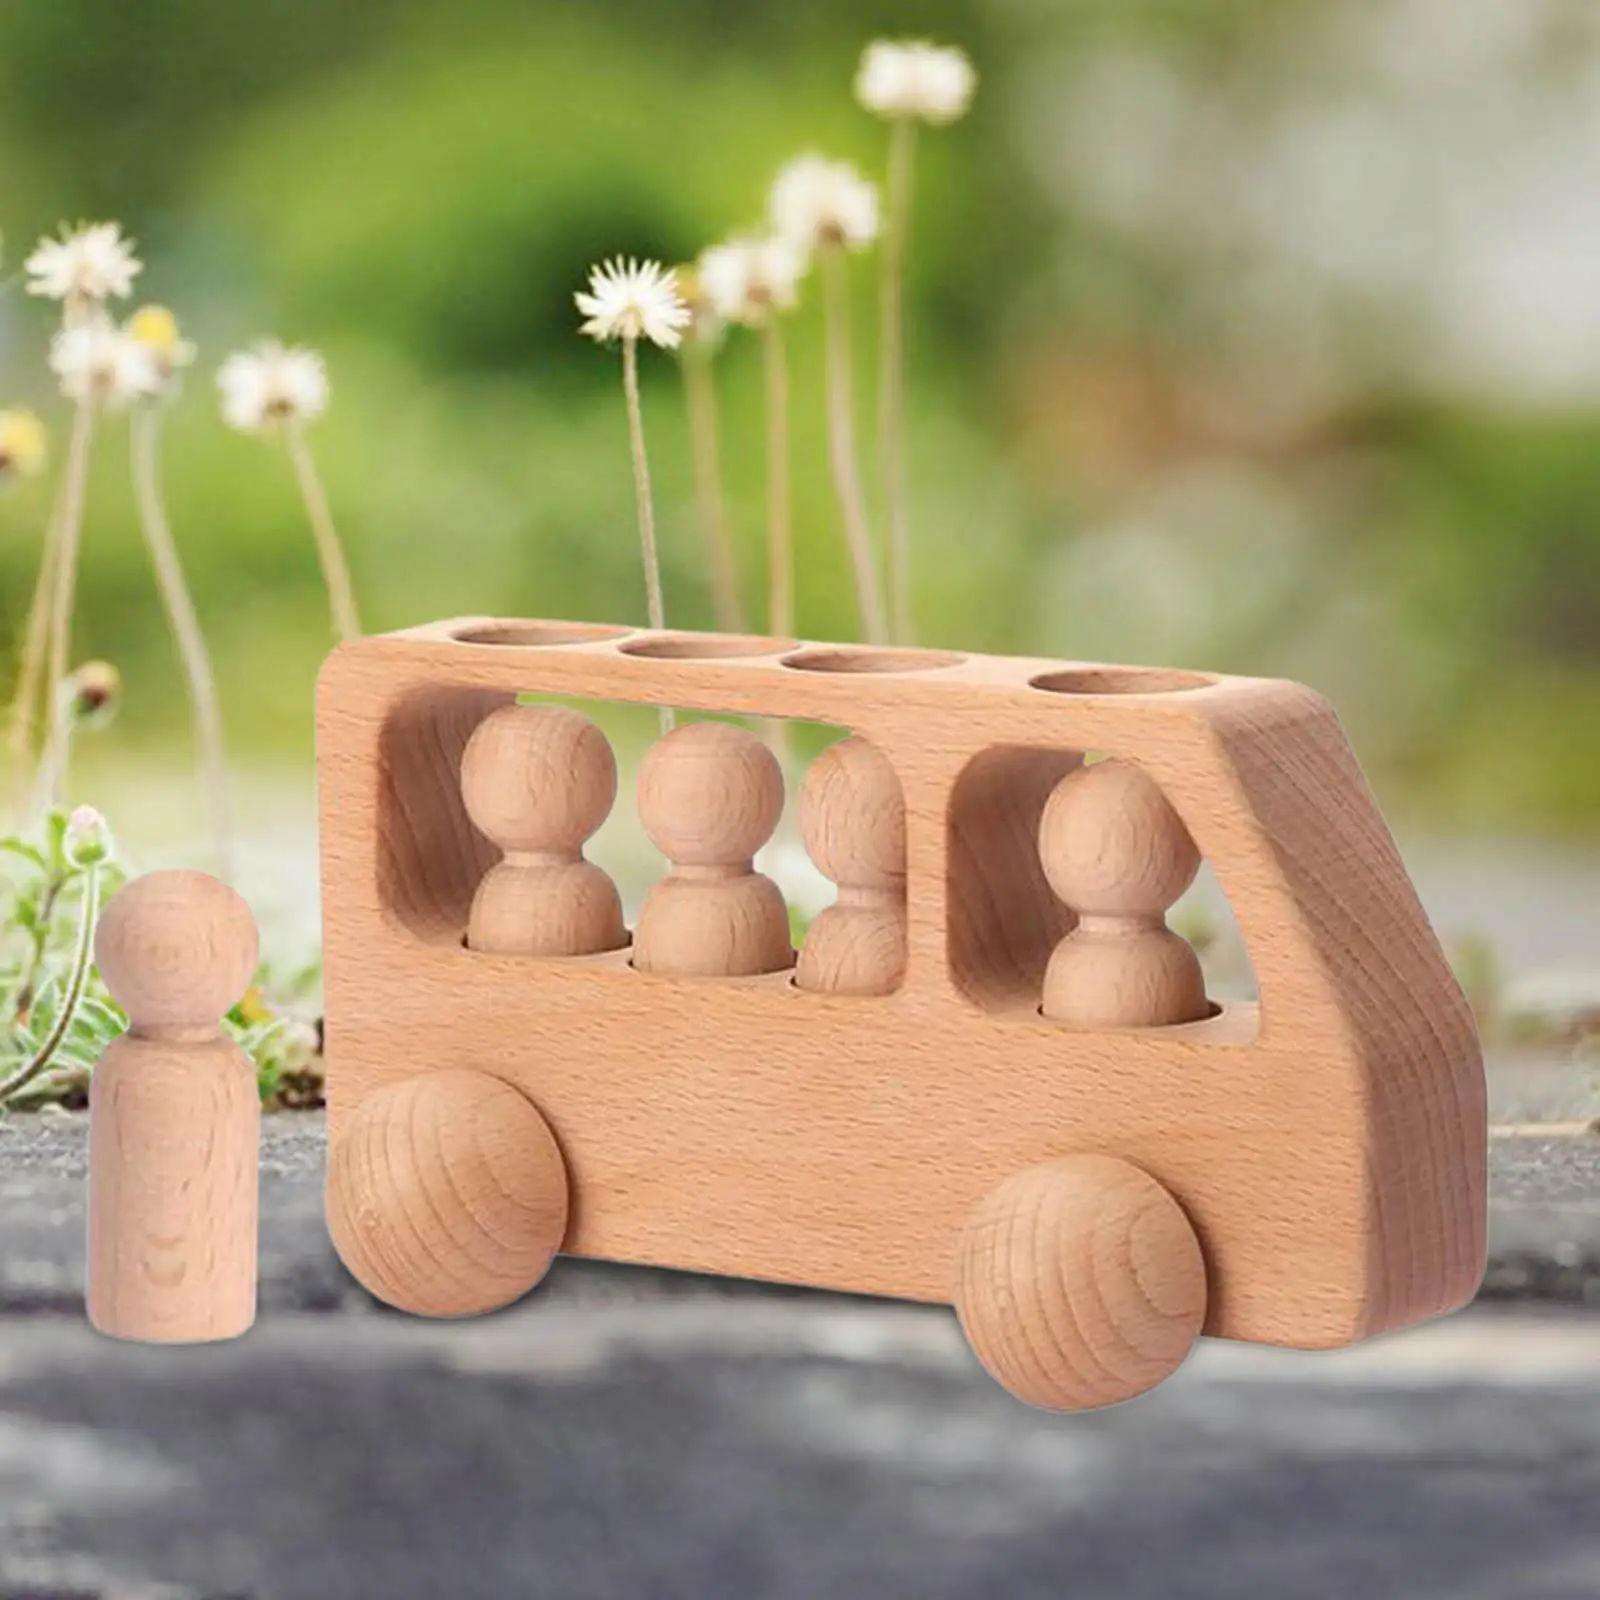 Wooden Bus Toy Preschool Learning Activities Car Blocks for Preschool